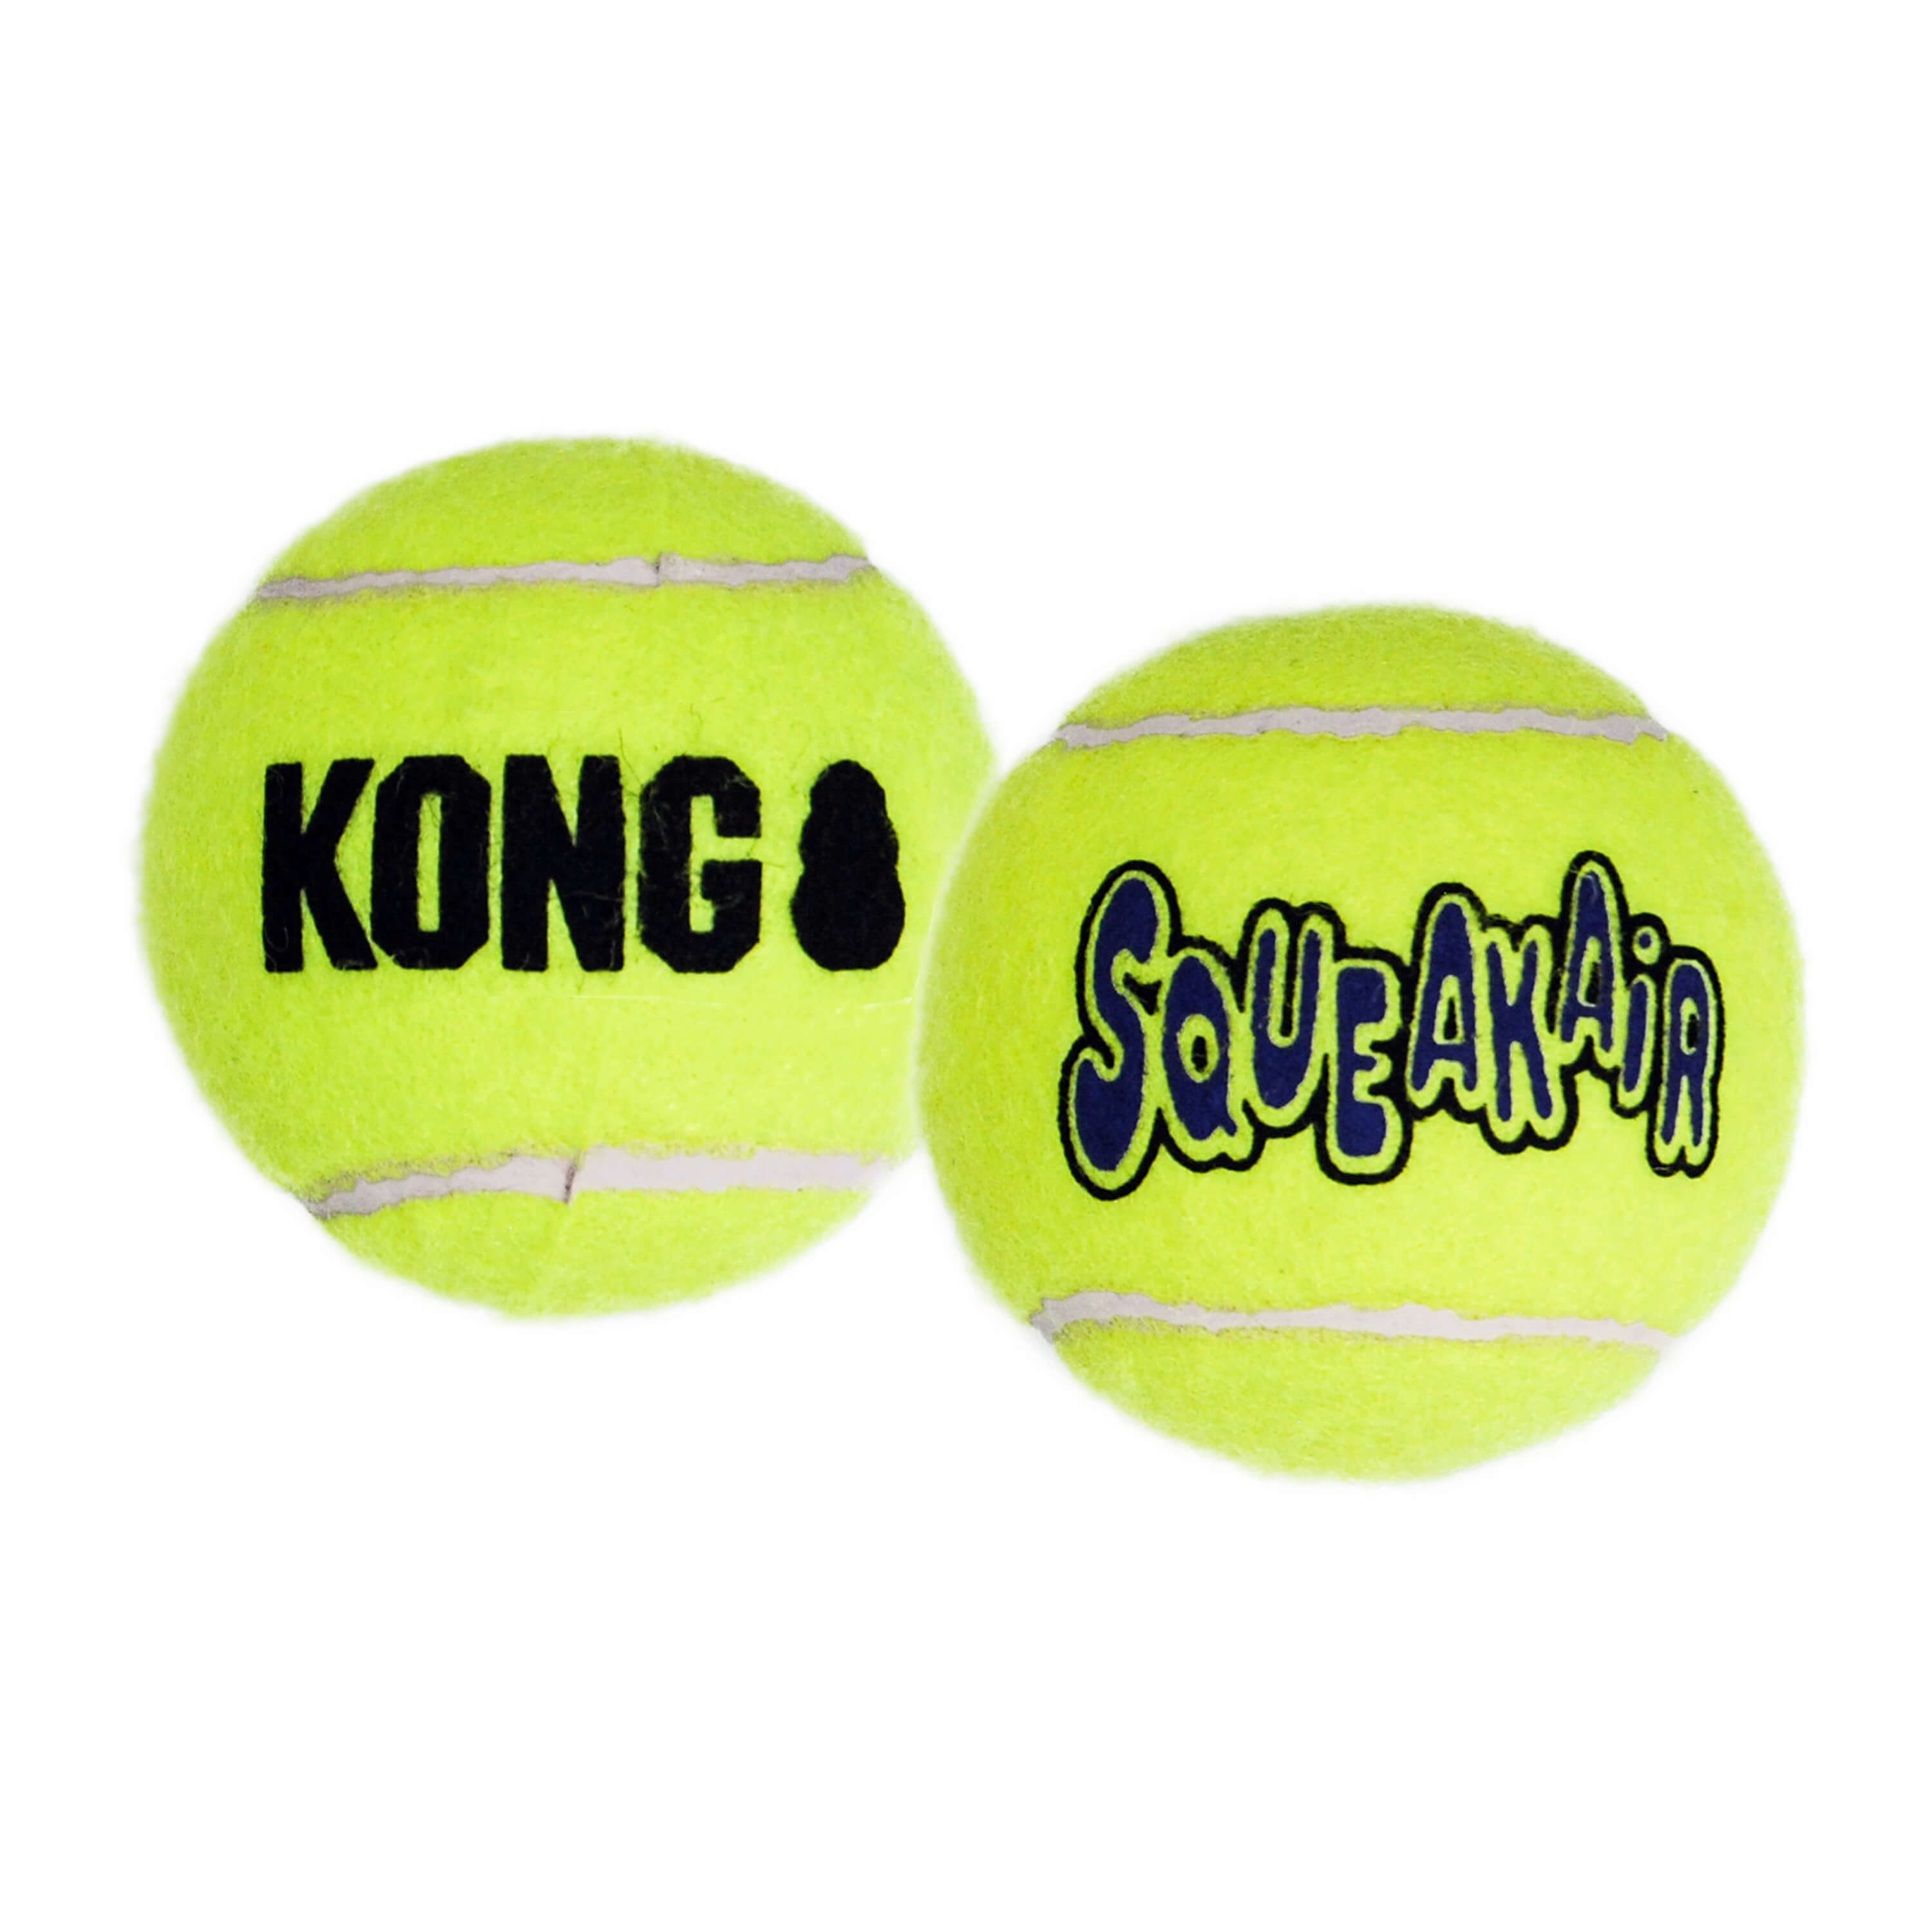 Kong dog toy - squeakair ball